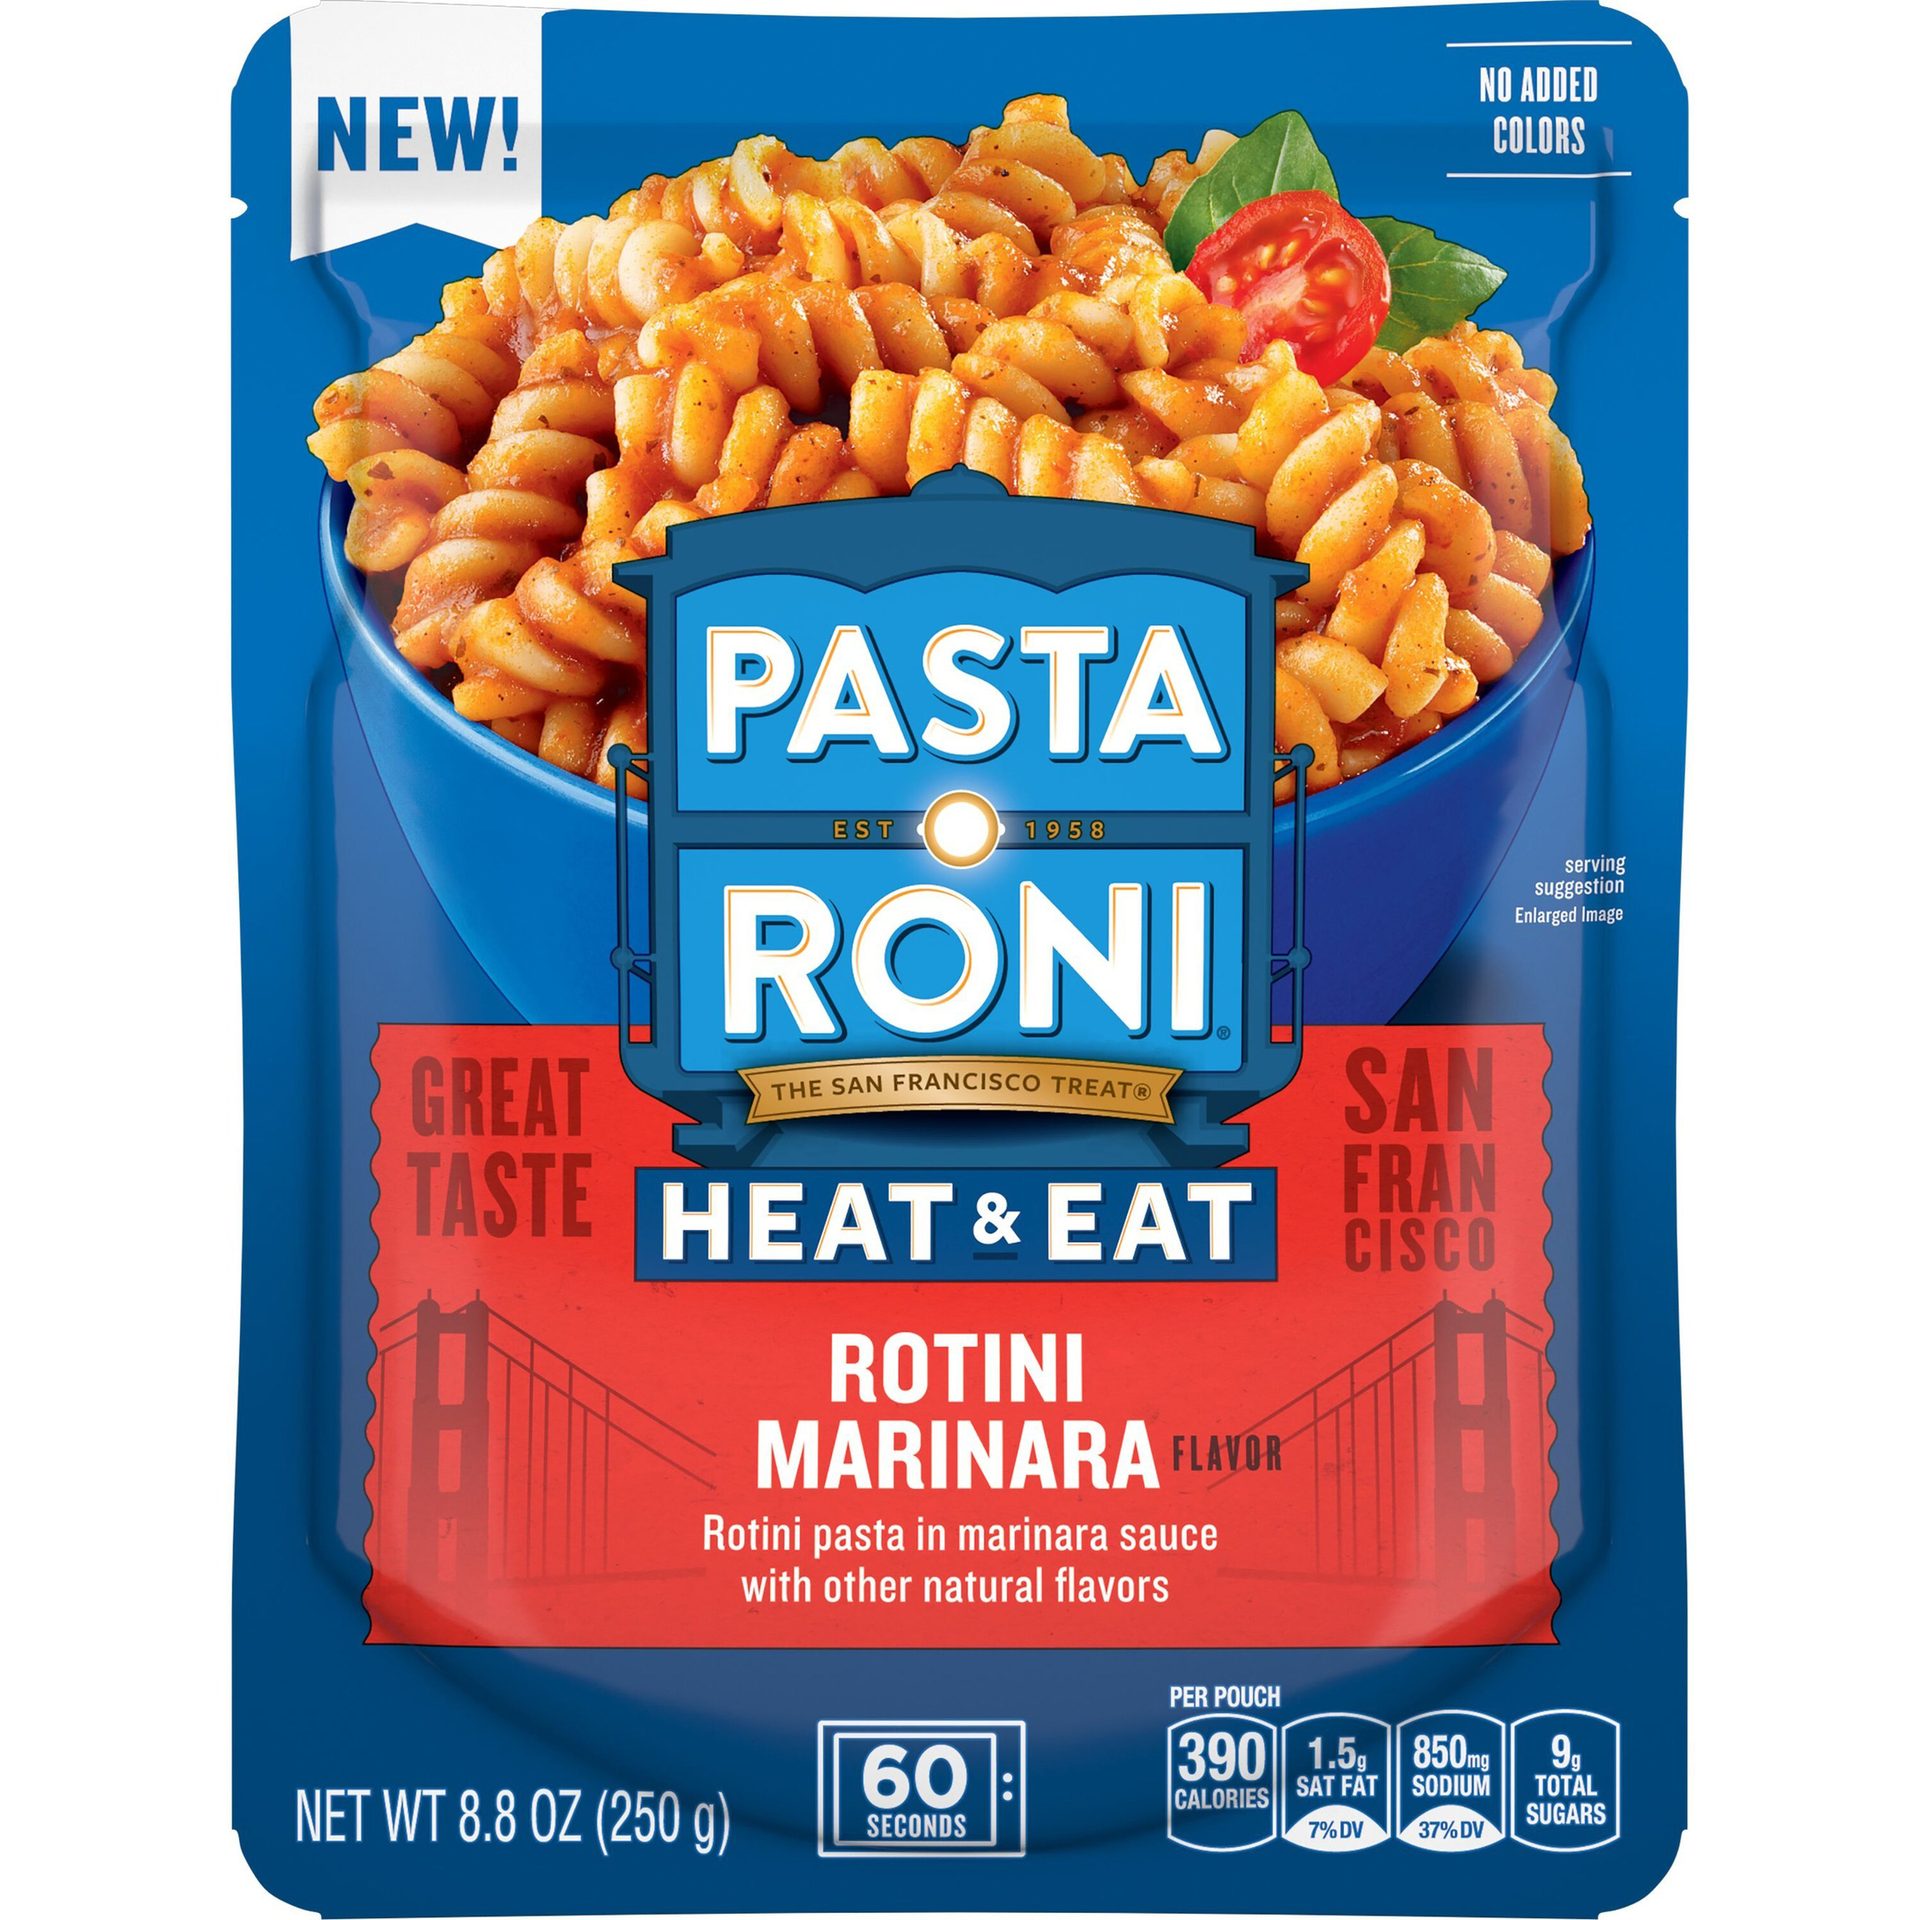 Pasta Roni Heat &#x26; Eat Rotini Marinara